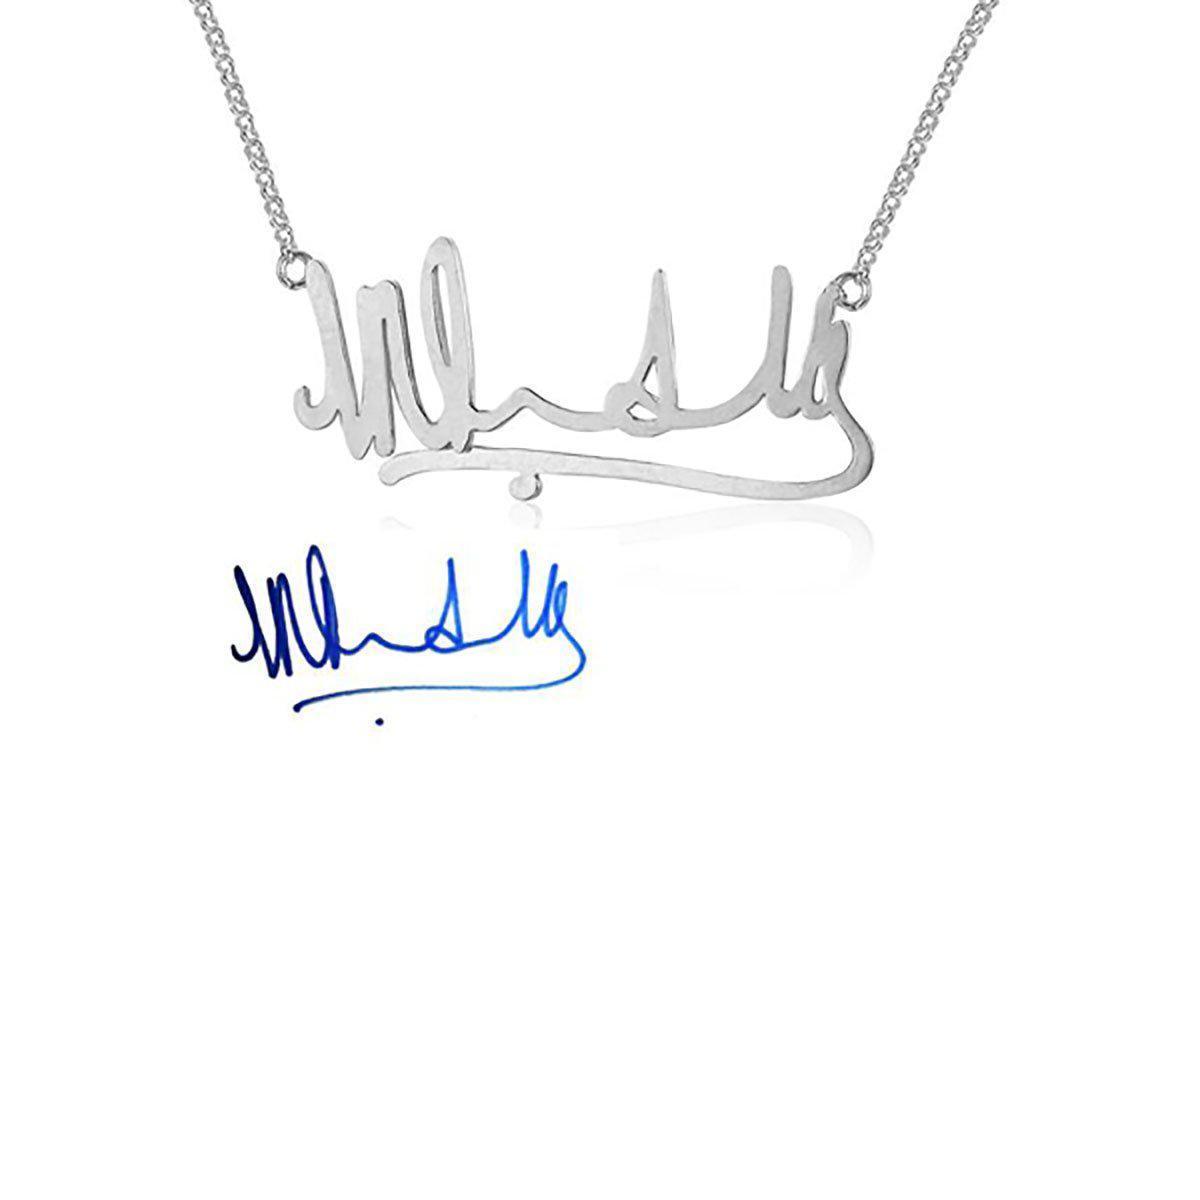 Personalize Your Handwritten Signature Necklace - Blinglane